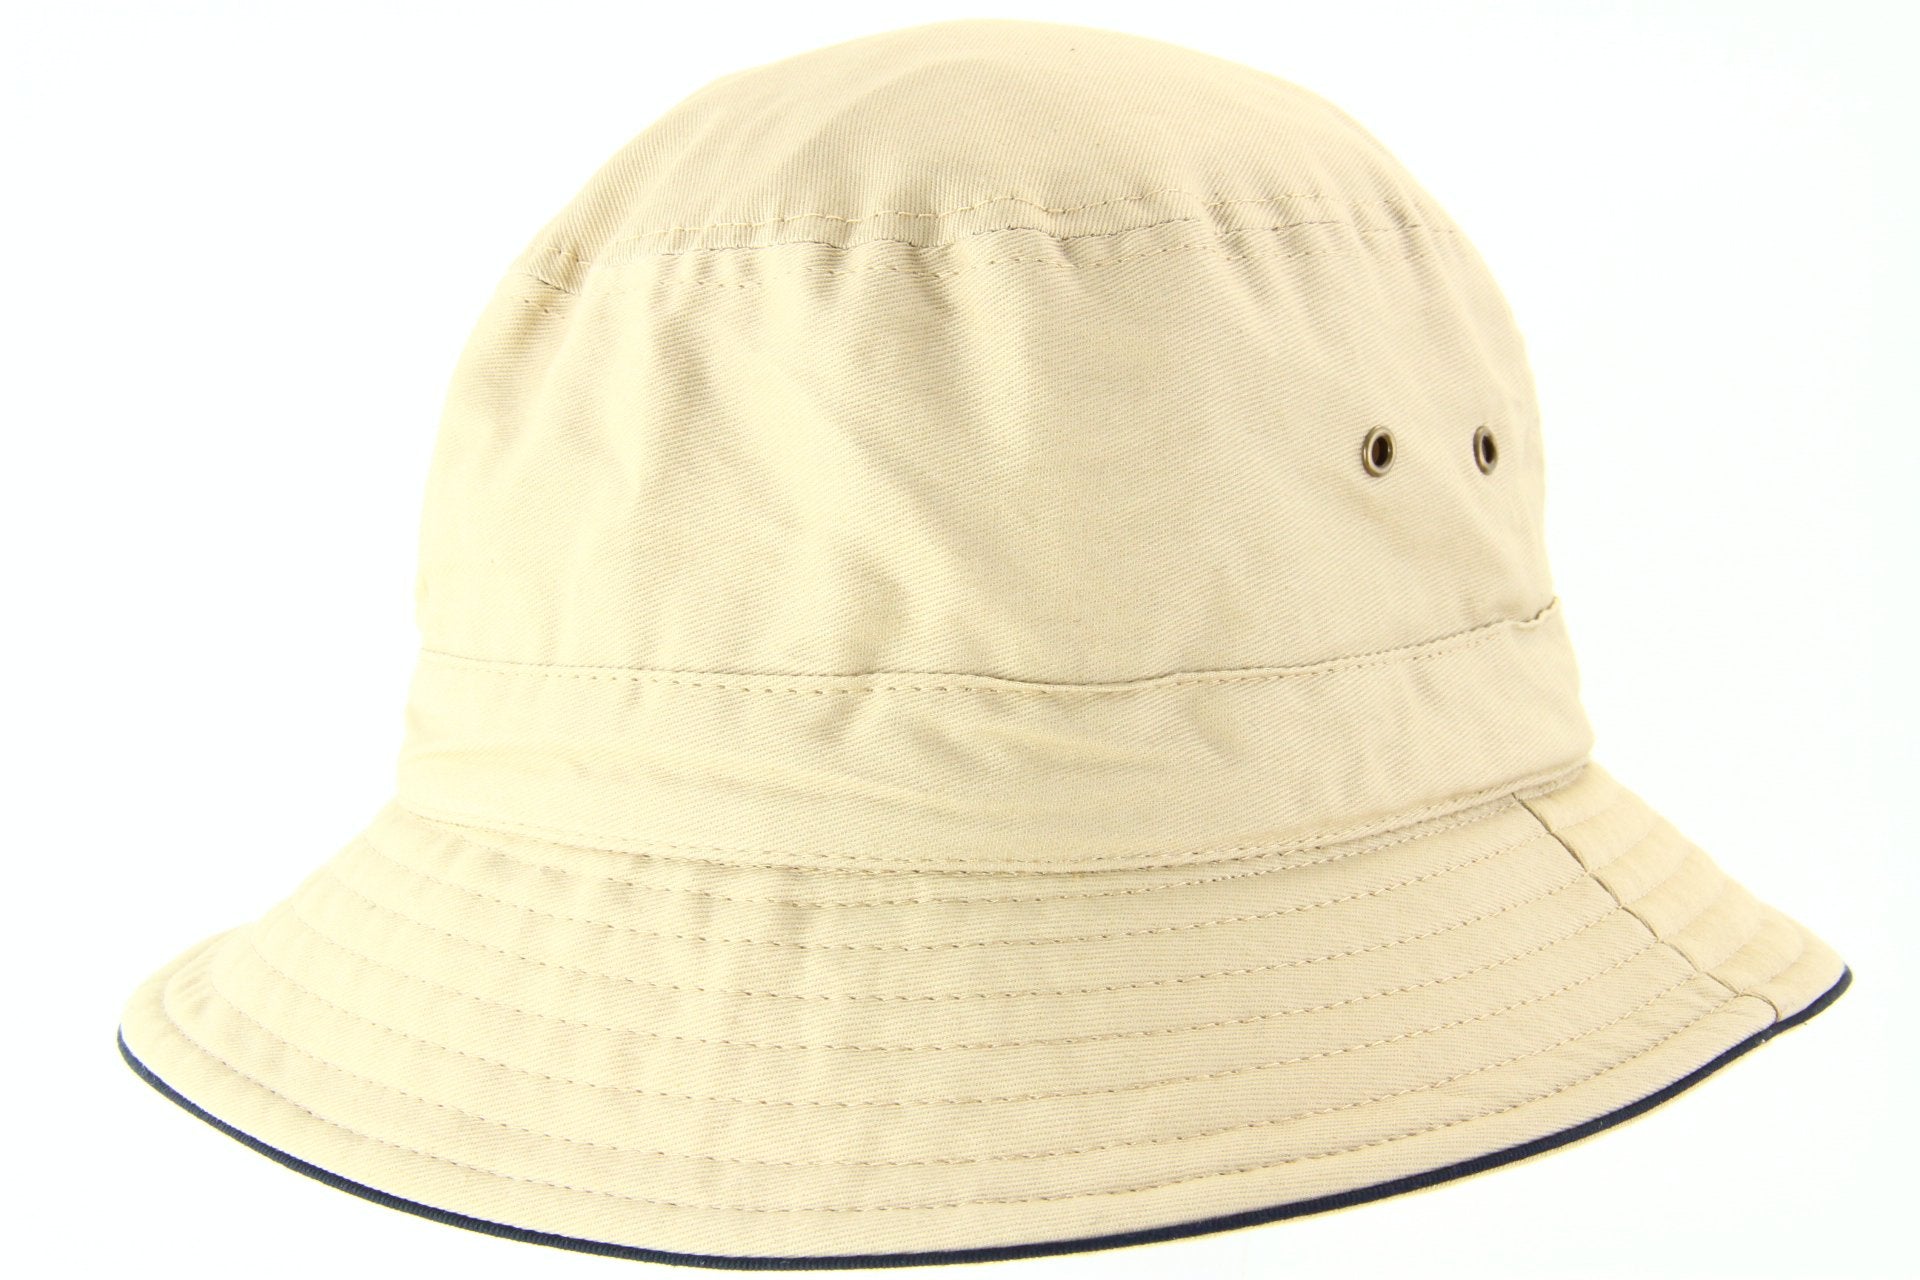 Cancer Council Jester Cotton Bucket Hat - Khaki/Navy